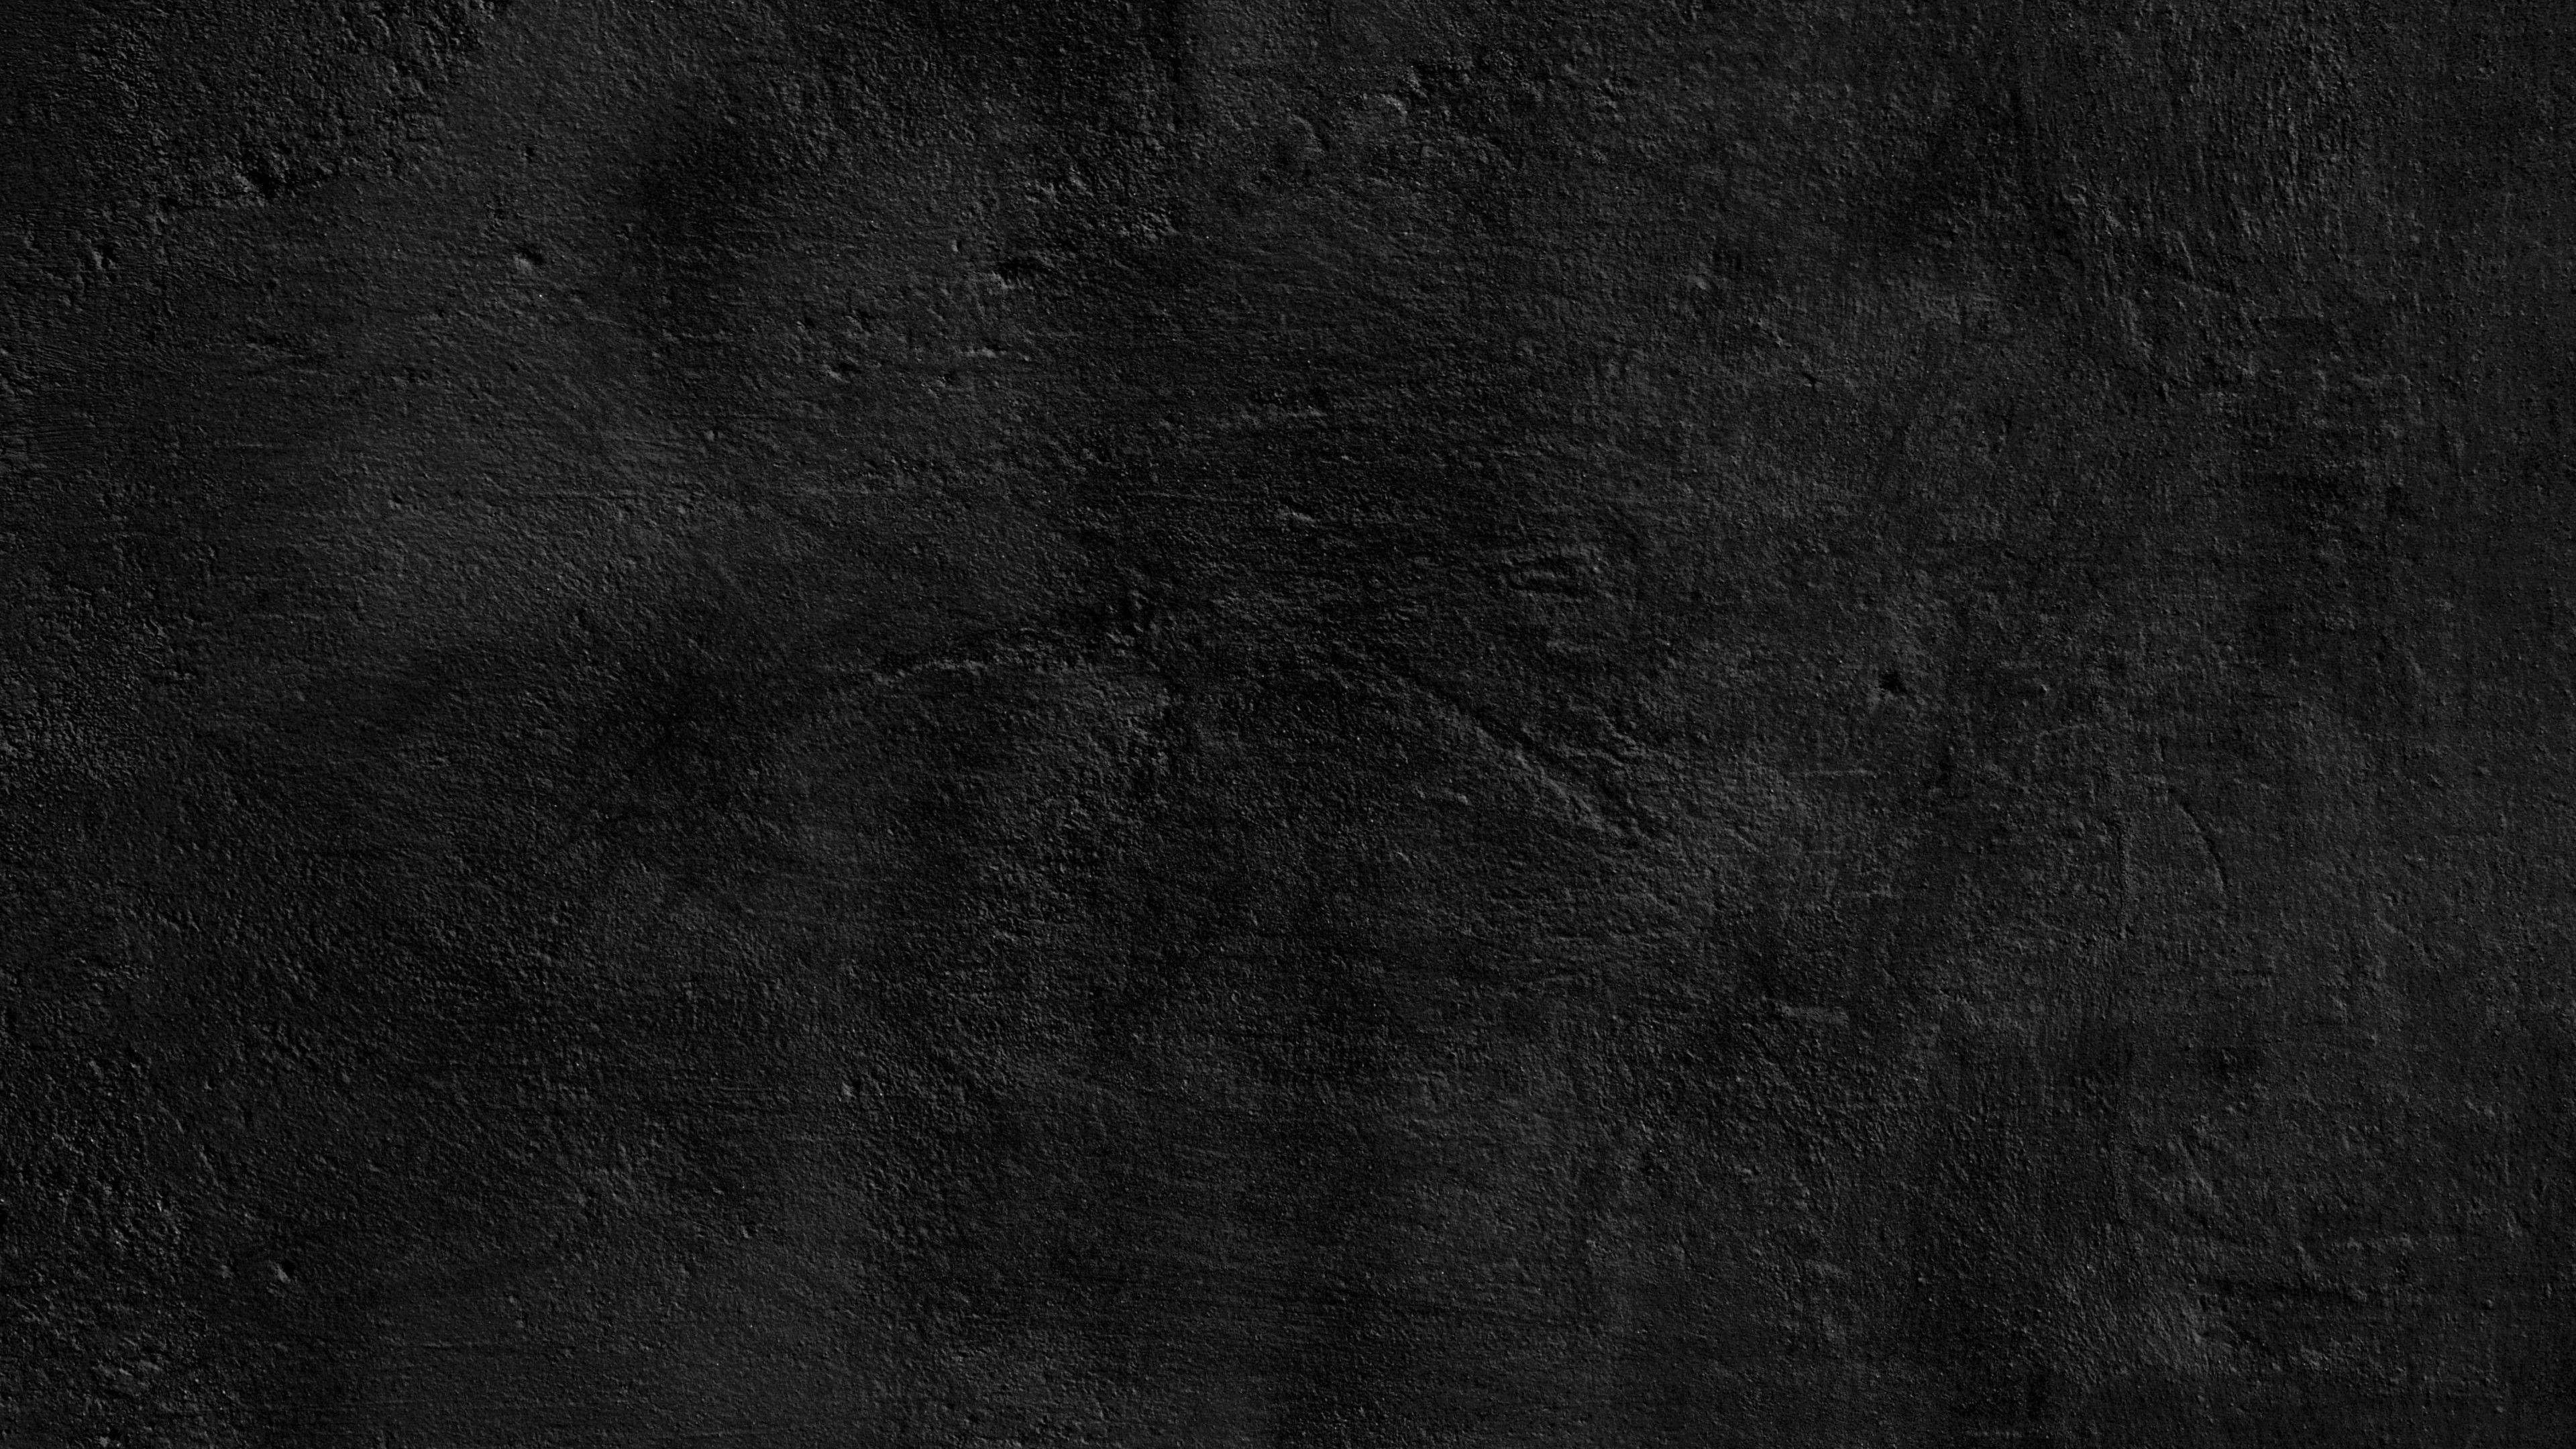 6452691 Black Grunge Backgrounds Images Stock Photos  Vectors   Shutterstock